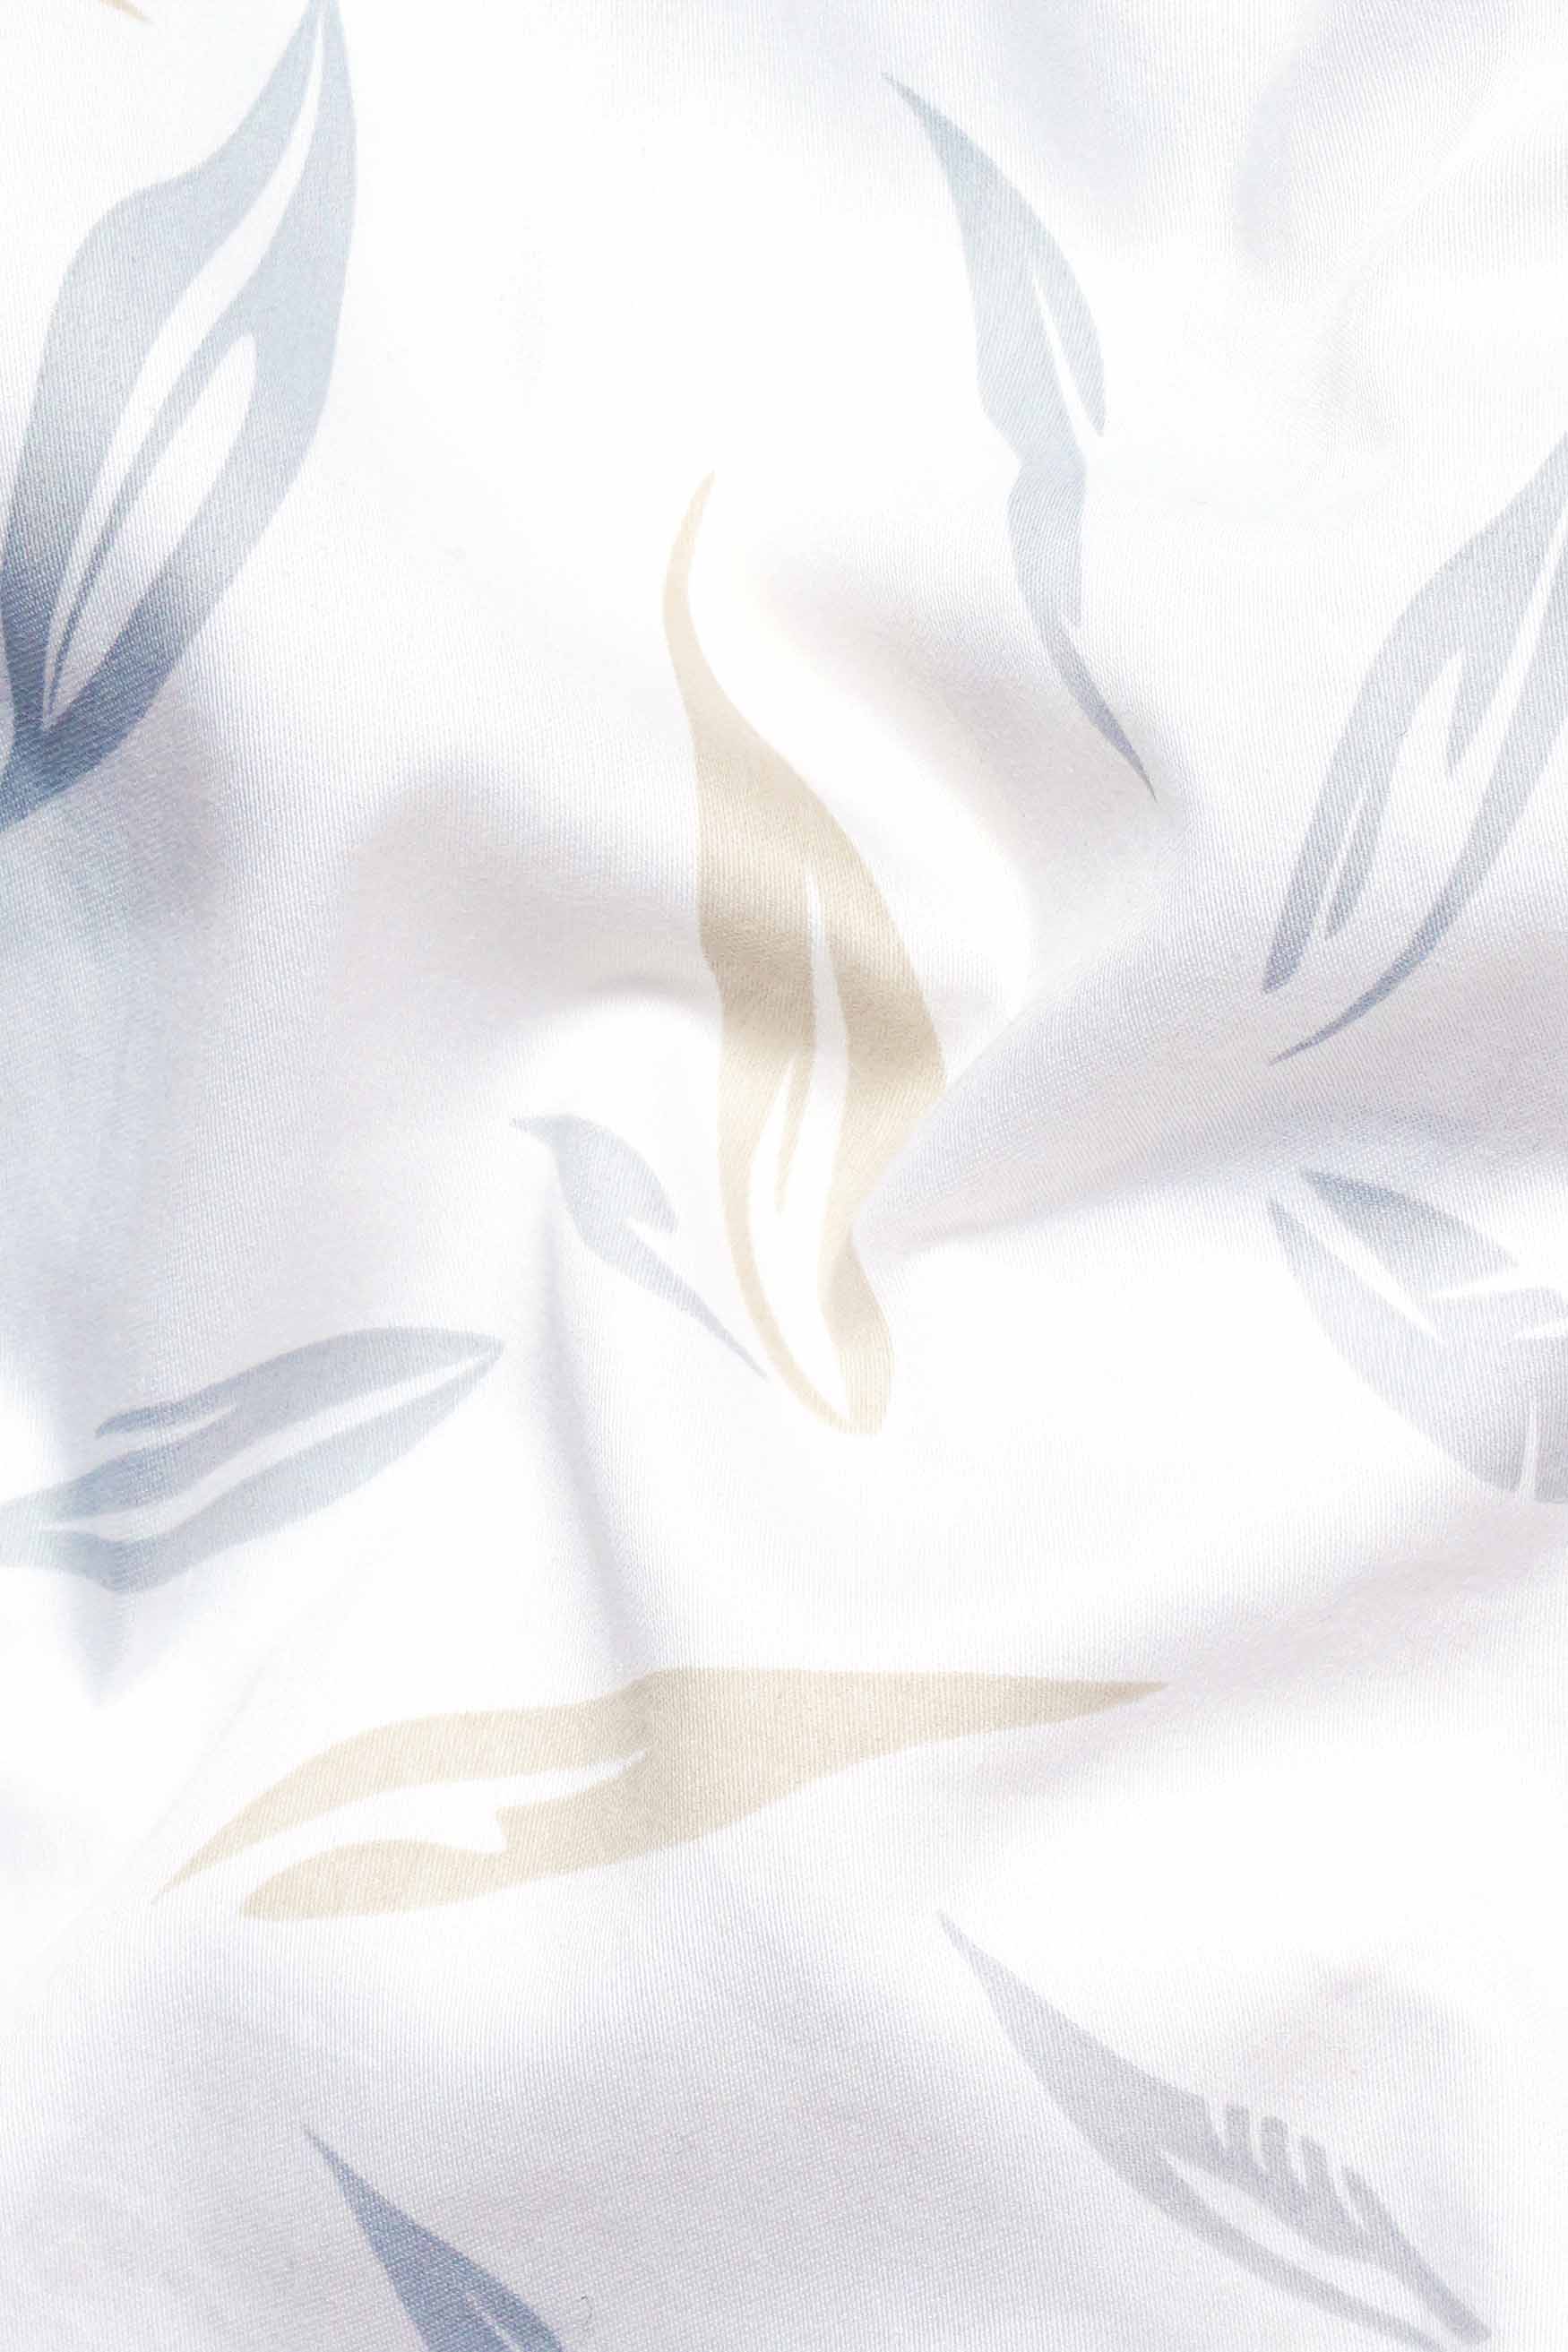 Bright White with Tango Gray and Bone Brown Printed Subtle Sheen Super Soft Premium Cotton Designer Shirt